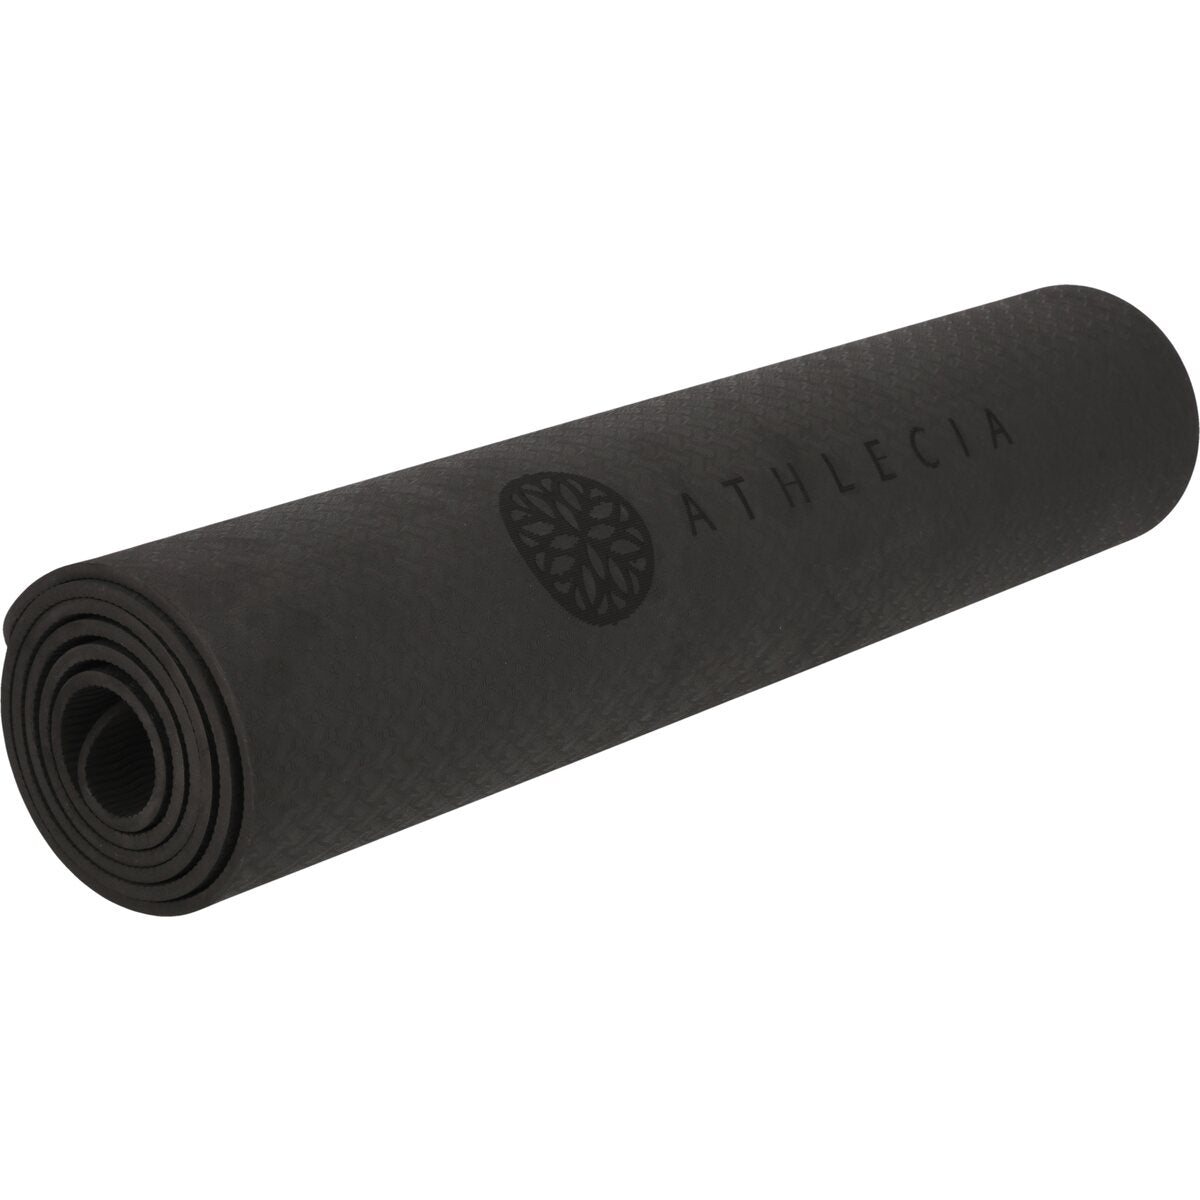 Athlecia Estell Yoga Mat - Black 2 Shaws Department Stores